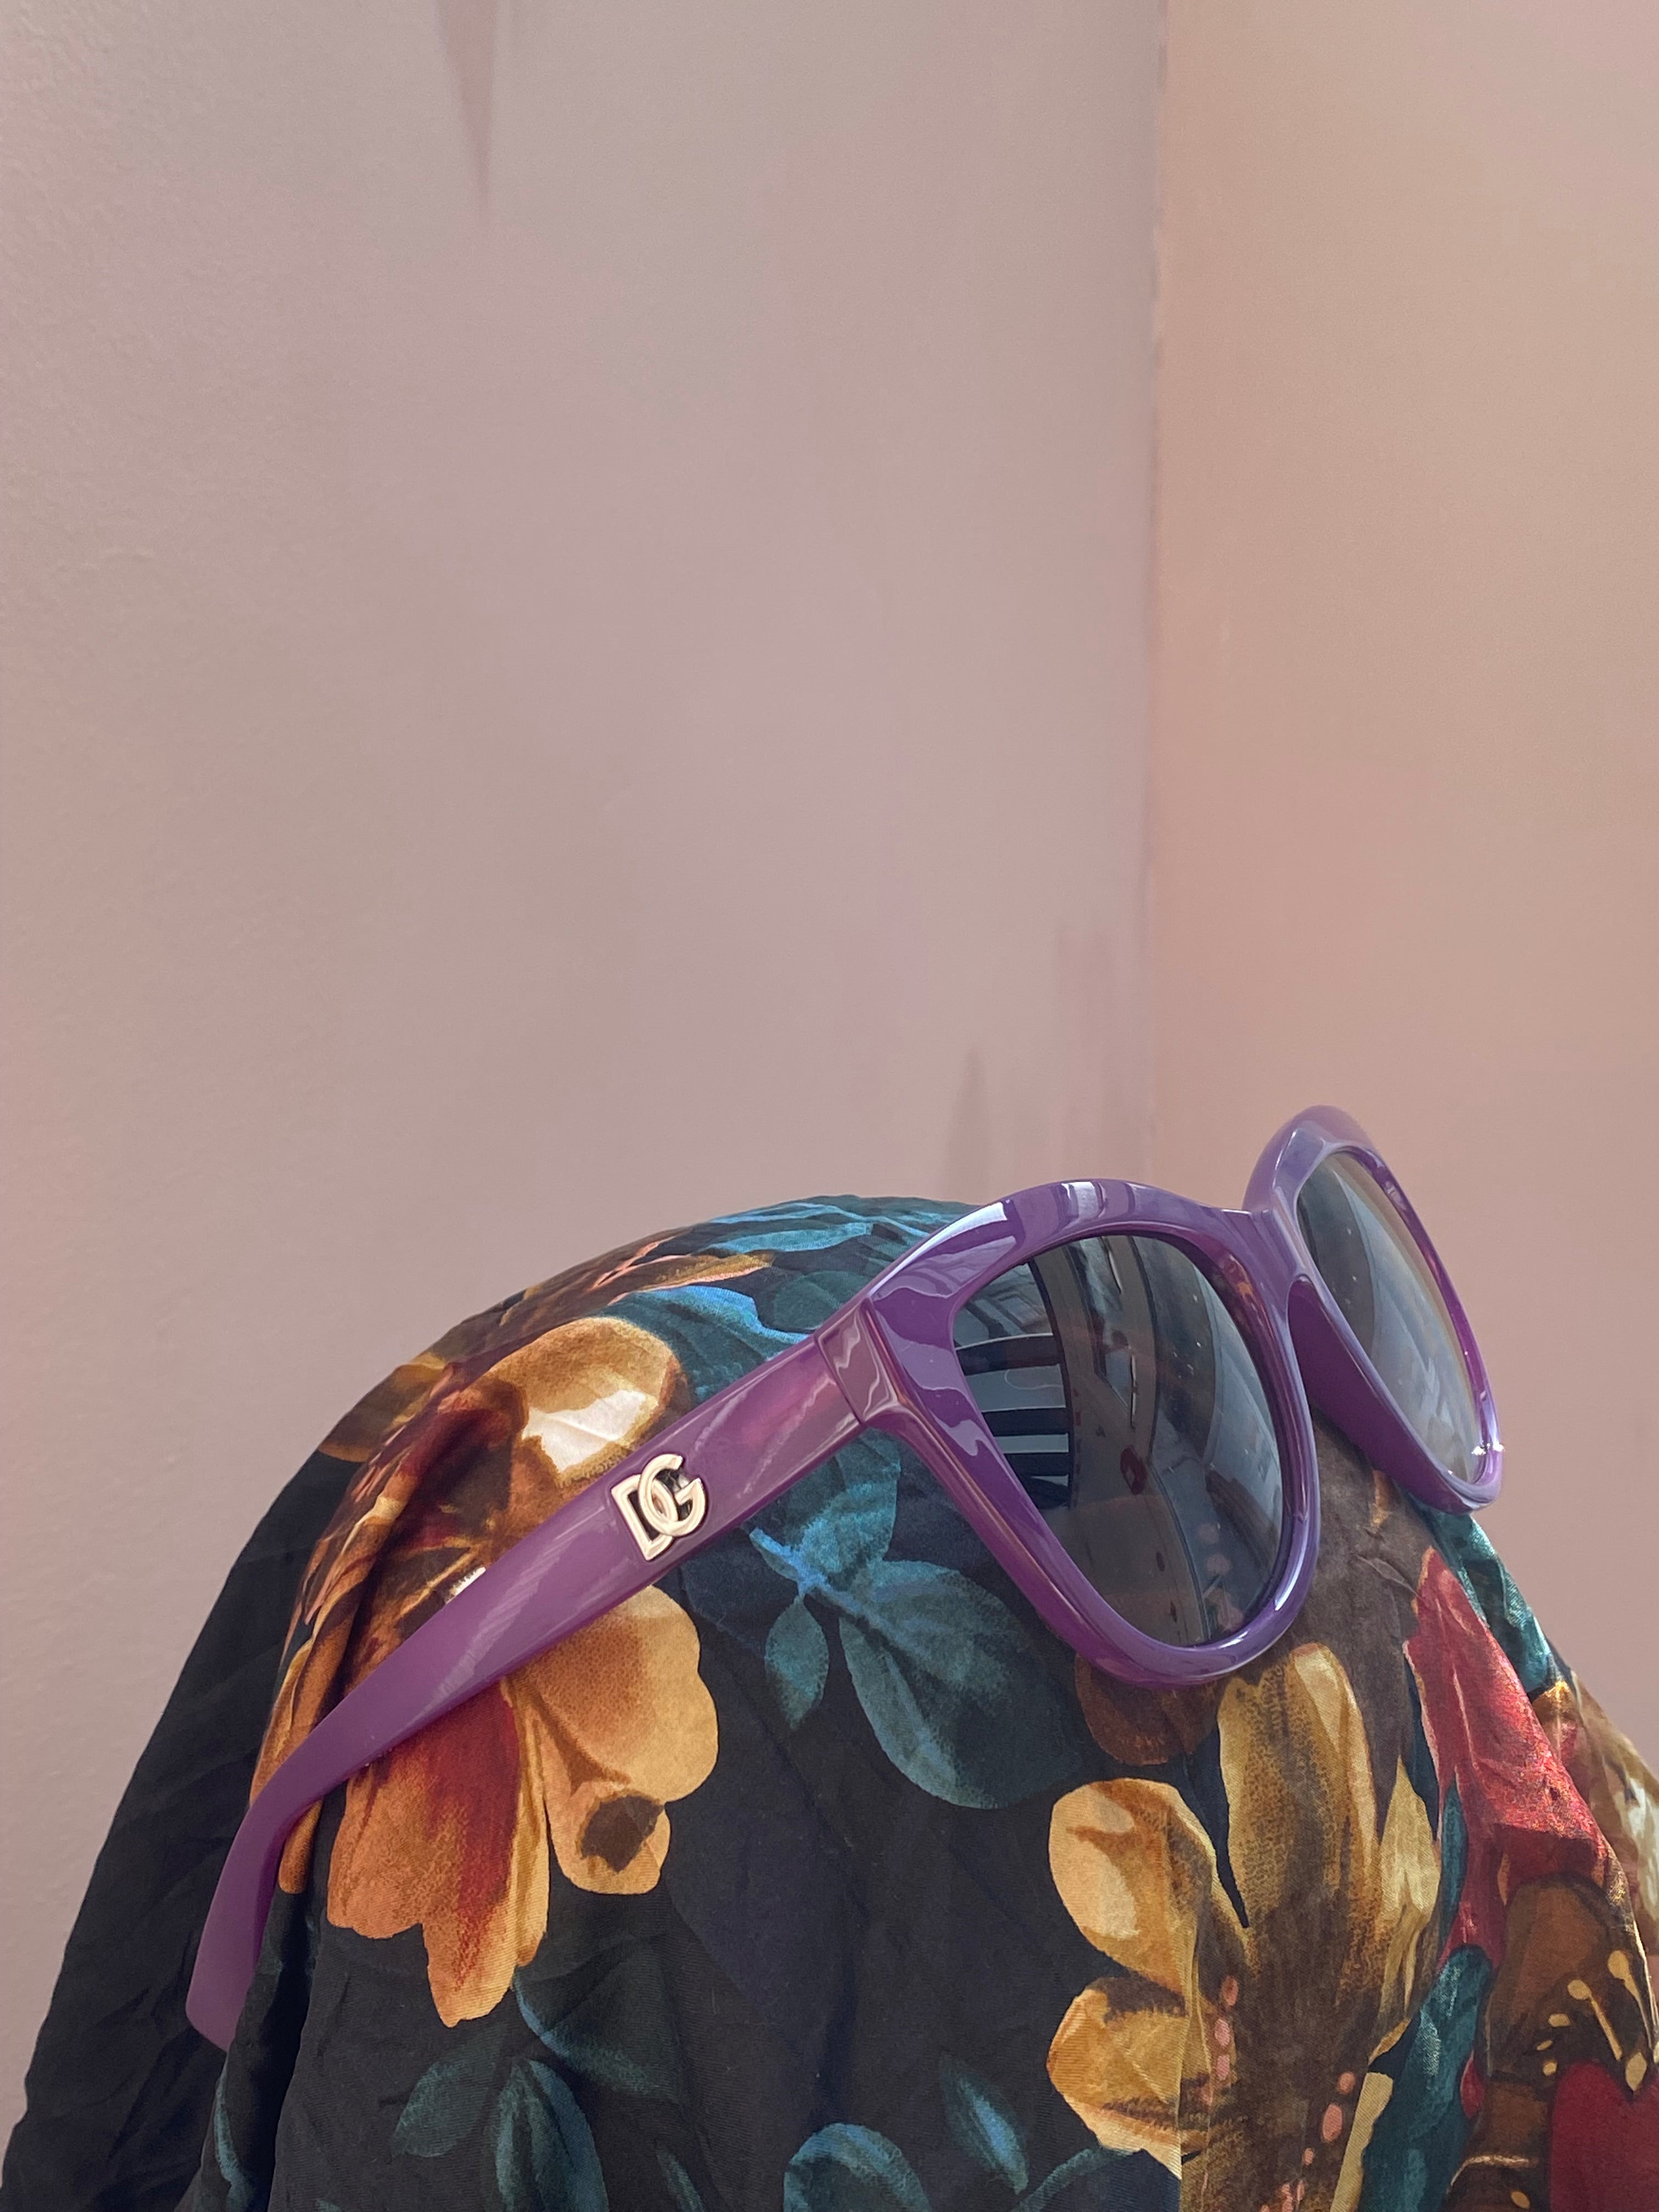 Dolce & Gabbana Purple Round Sunglasses